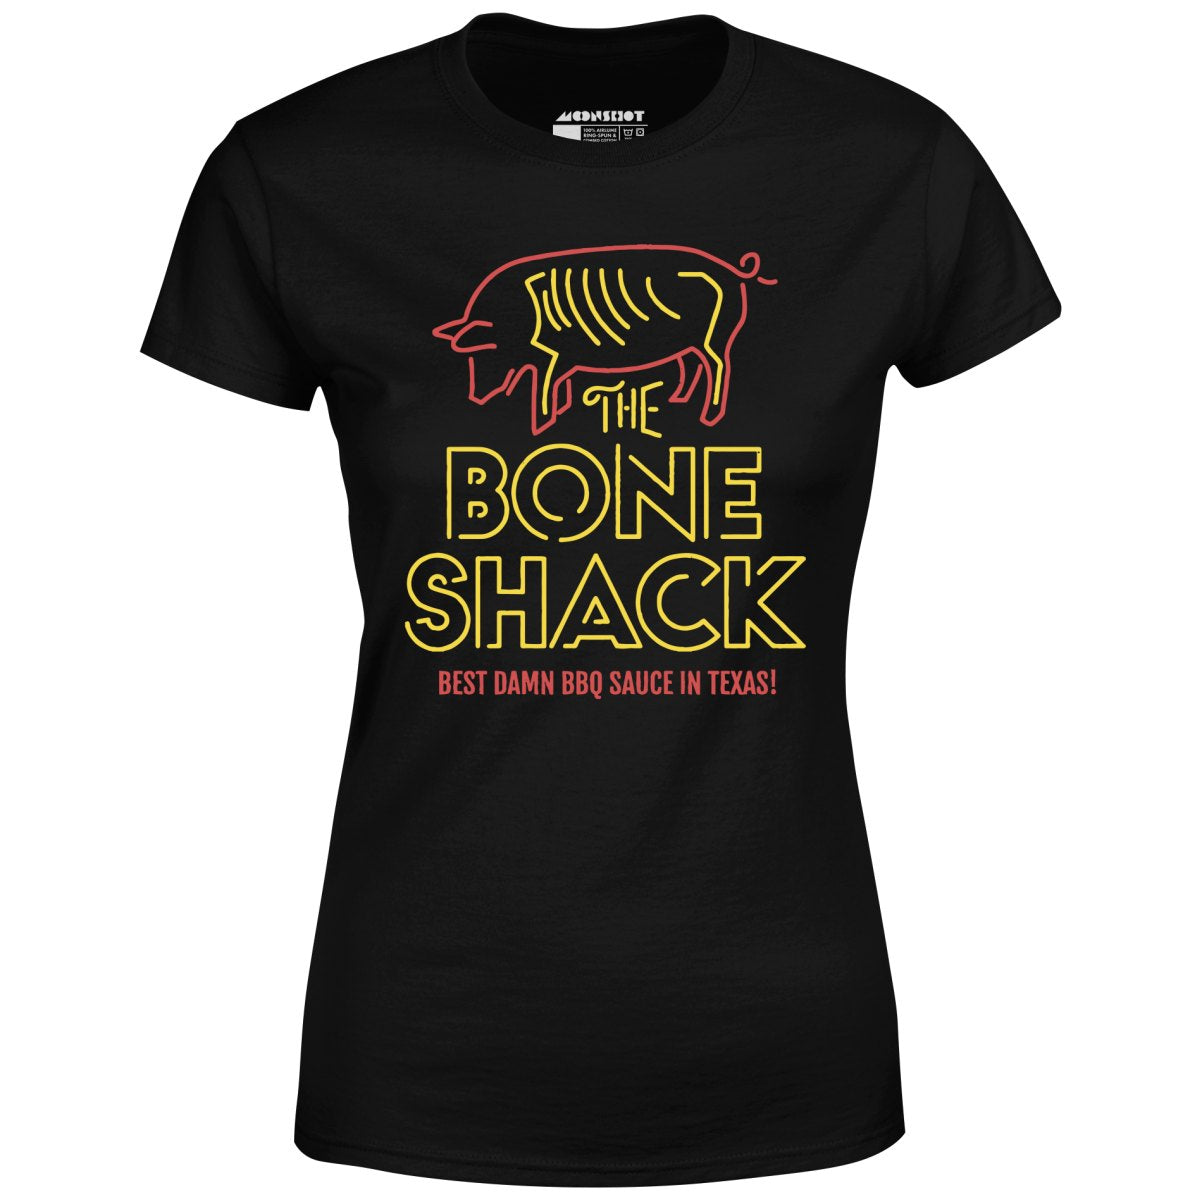 The Bone Shack - Planet Terror - Women's T-Shirt